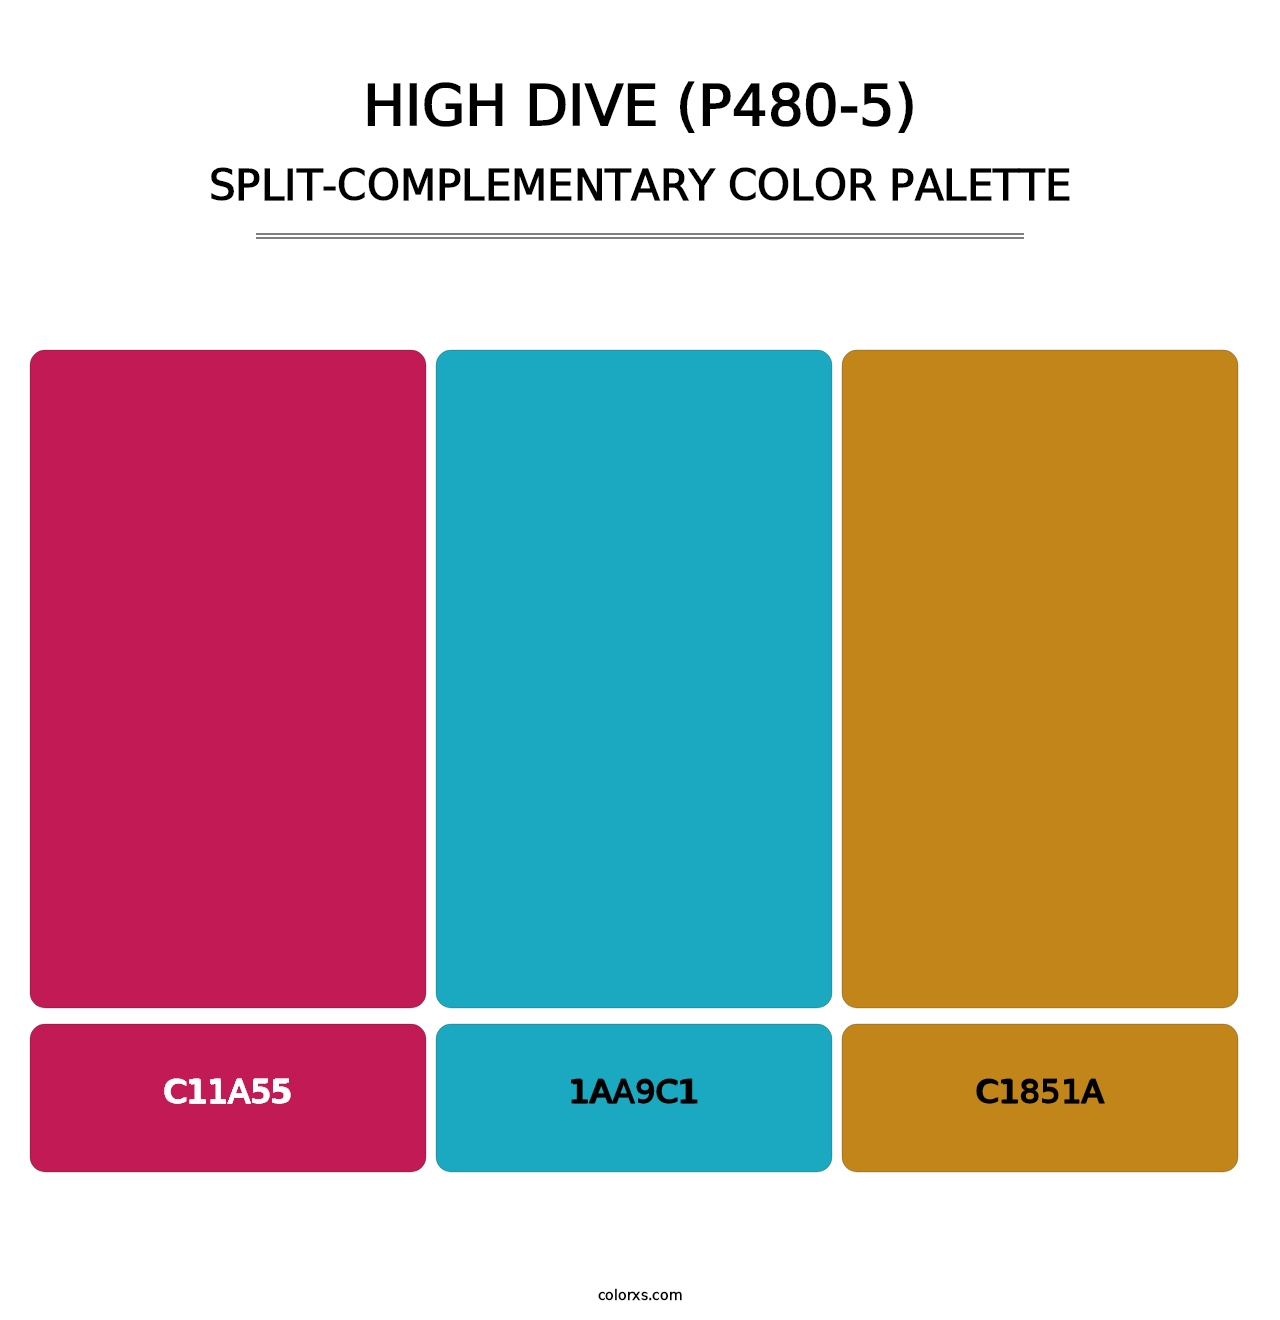 High Dive (P480-5) - Split-Complementary Color Palette